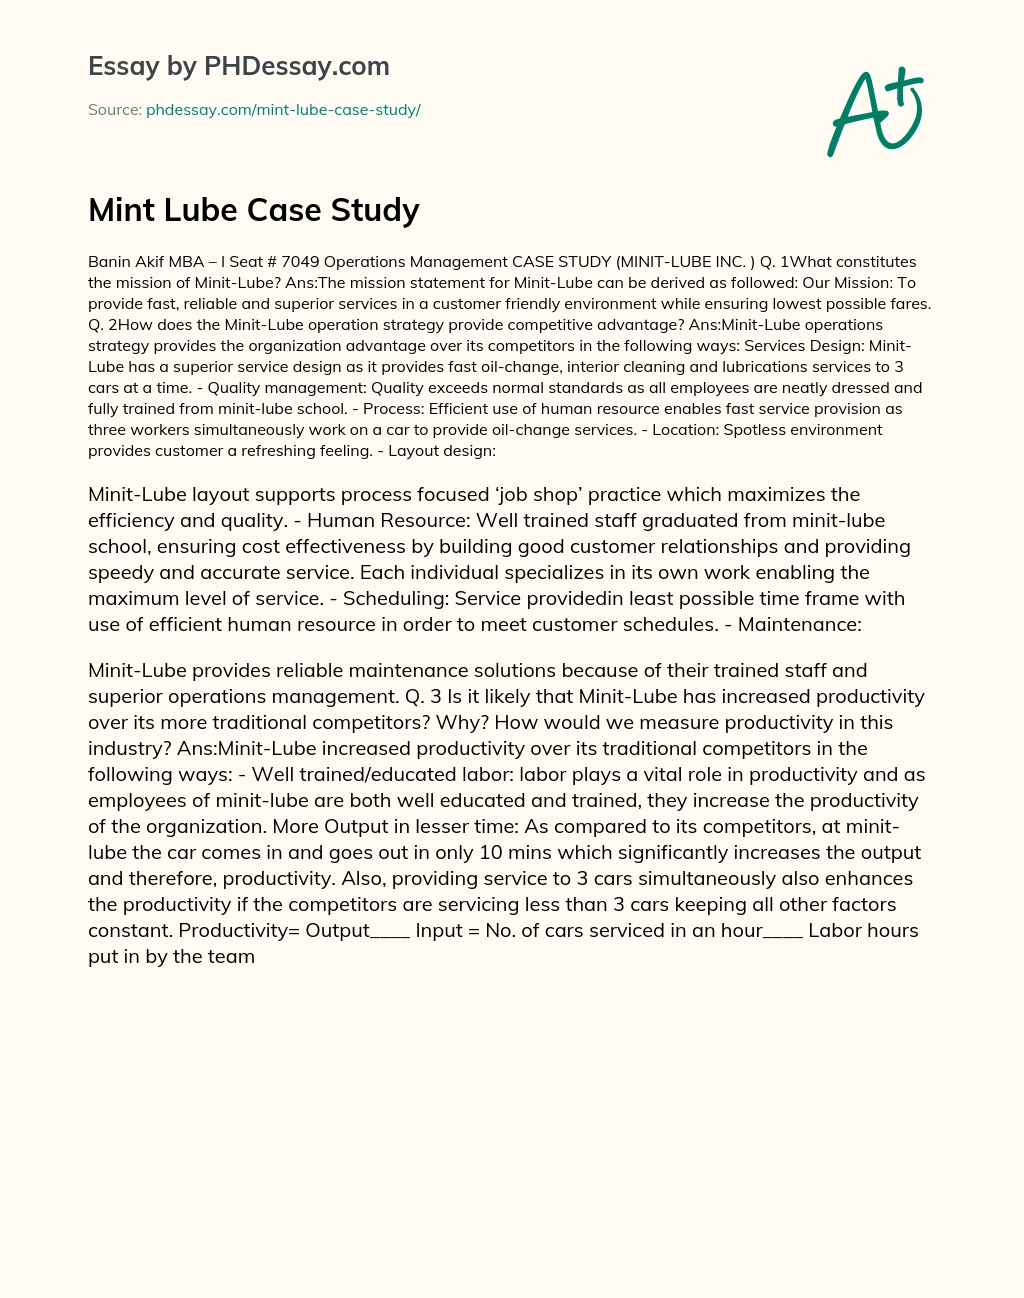 Mint Lube Case Study essay